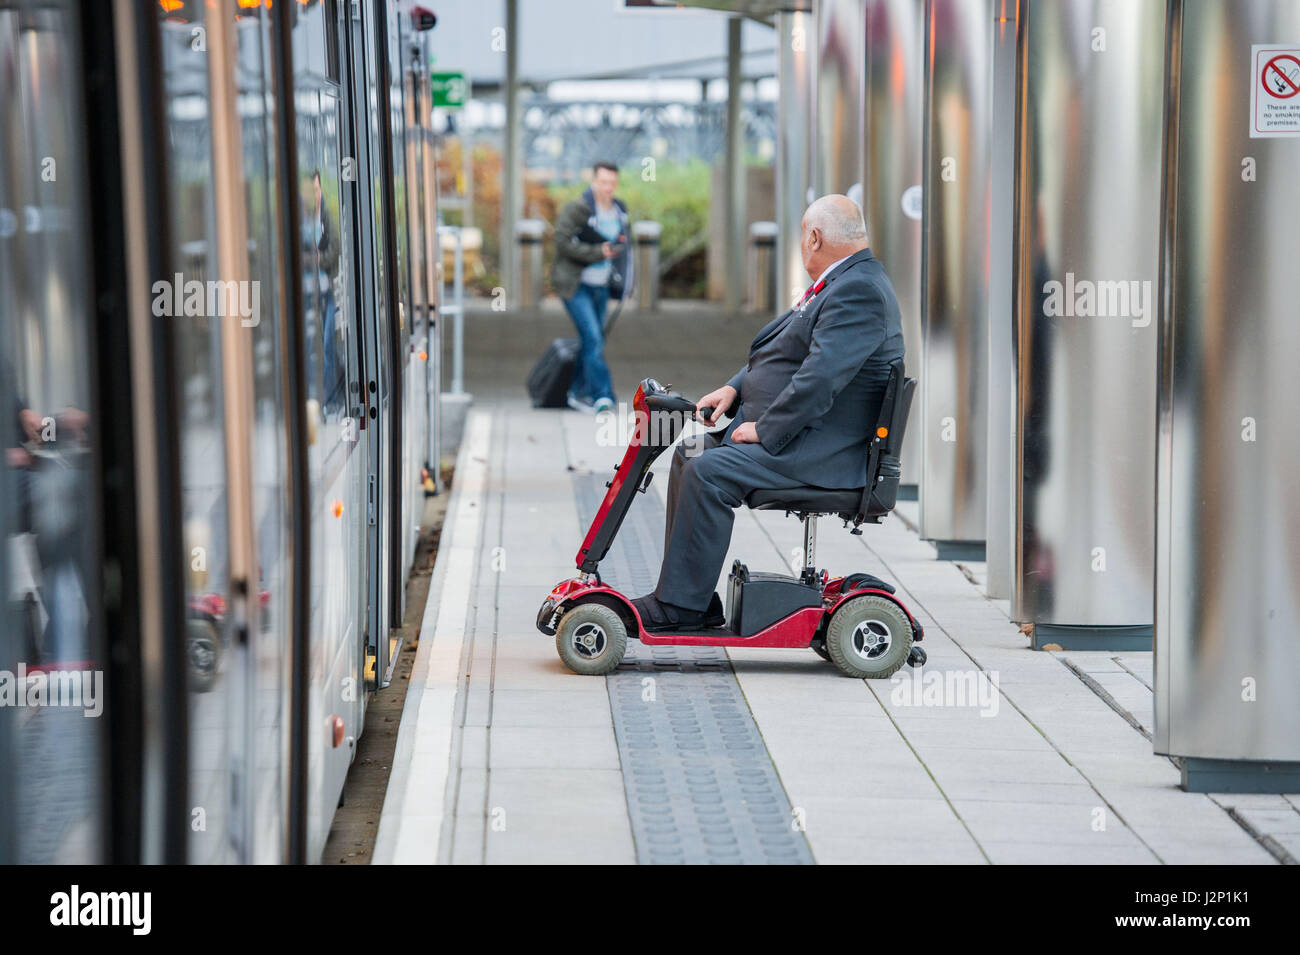 Trasporto per Edimburgo, tram, scooter per la mobilità, disabili, George Deeks Foto Stock